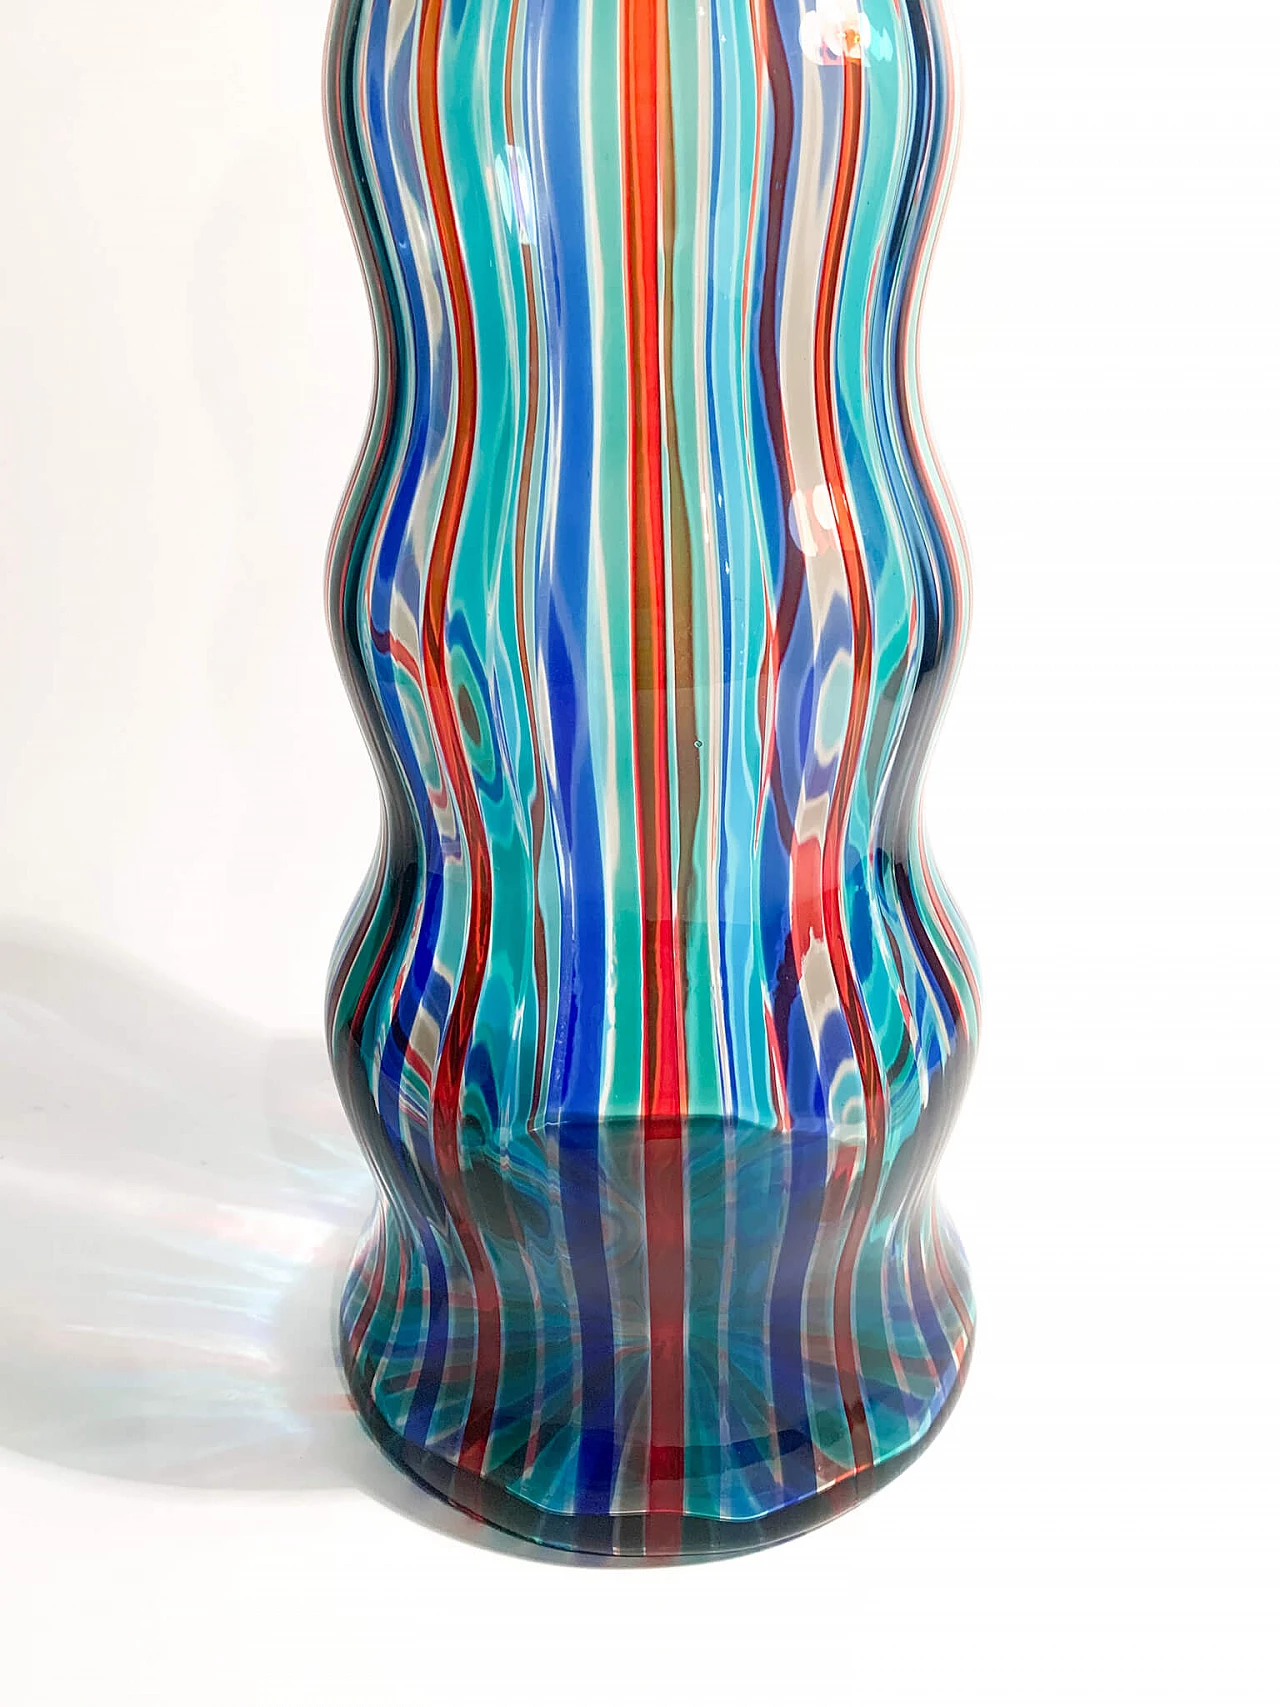 Arado vase in Murano glass by Alessandro Mendini for Venini, 1988 9